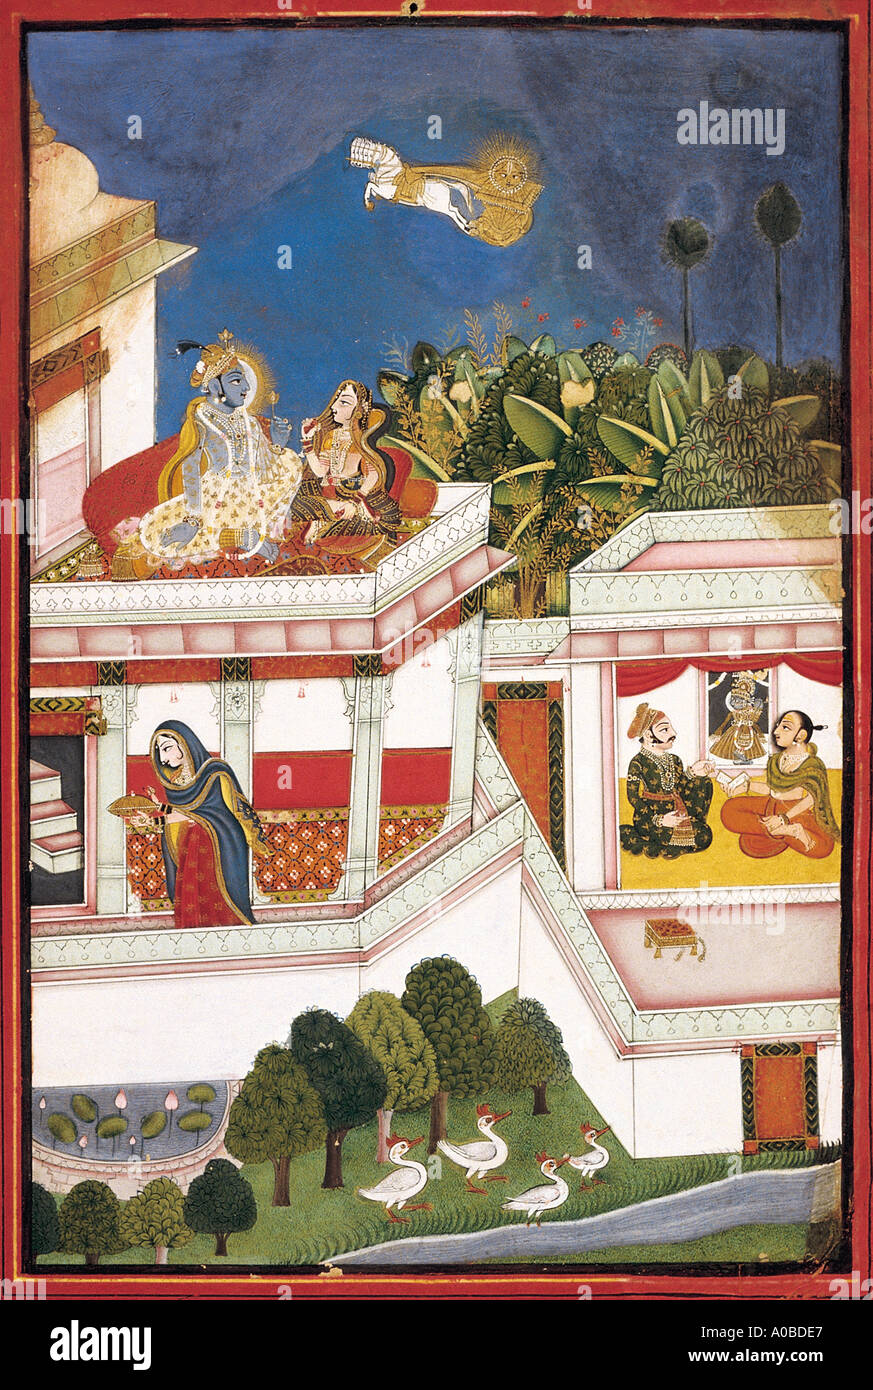 Scène Baramasa. Kotah, Rajasthan, Inde. En date du : 1750 A.D. taille originale : 27,8 x 18,2 cm. Banque D'Images